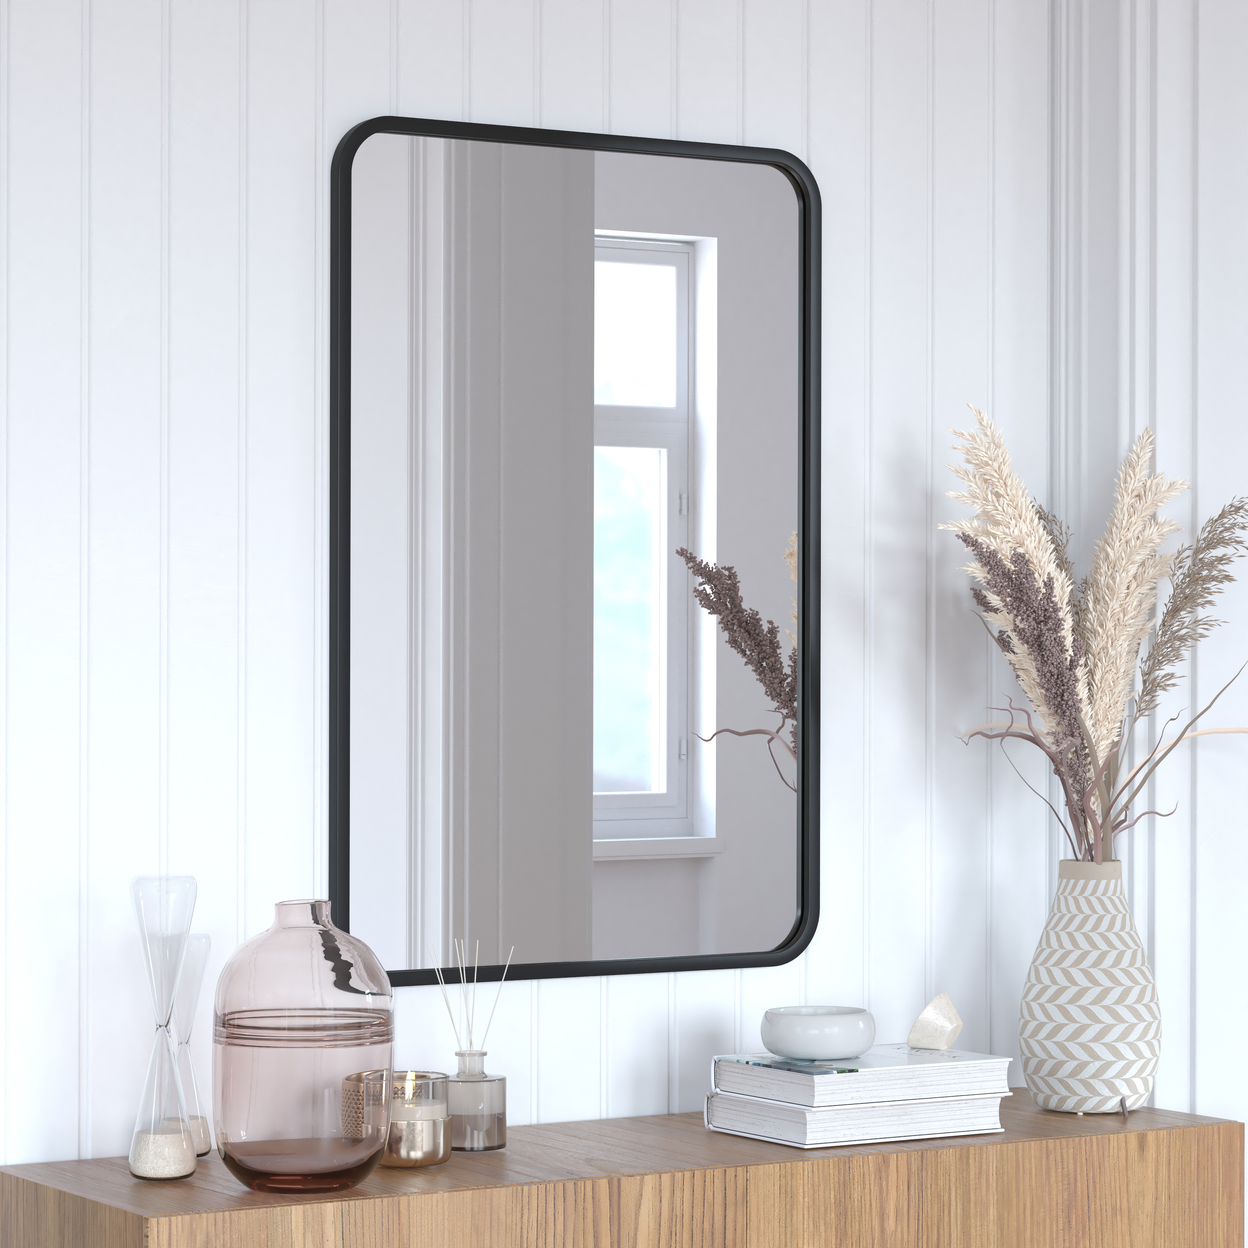 Jada 24 X 36 Decorative Wall Mirror - Rounded Corners, Bathroom & Living Room Glass Mirror Hangs Horizontal Or Vertical, Matte Black